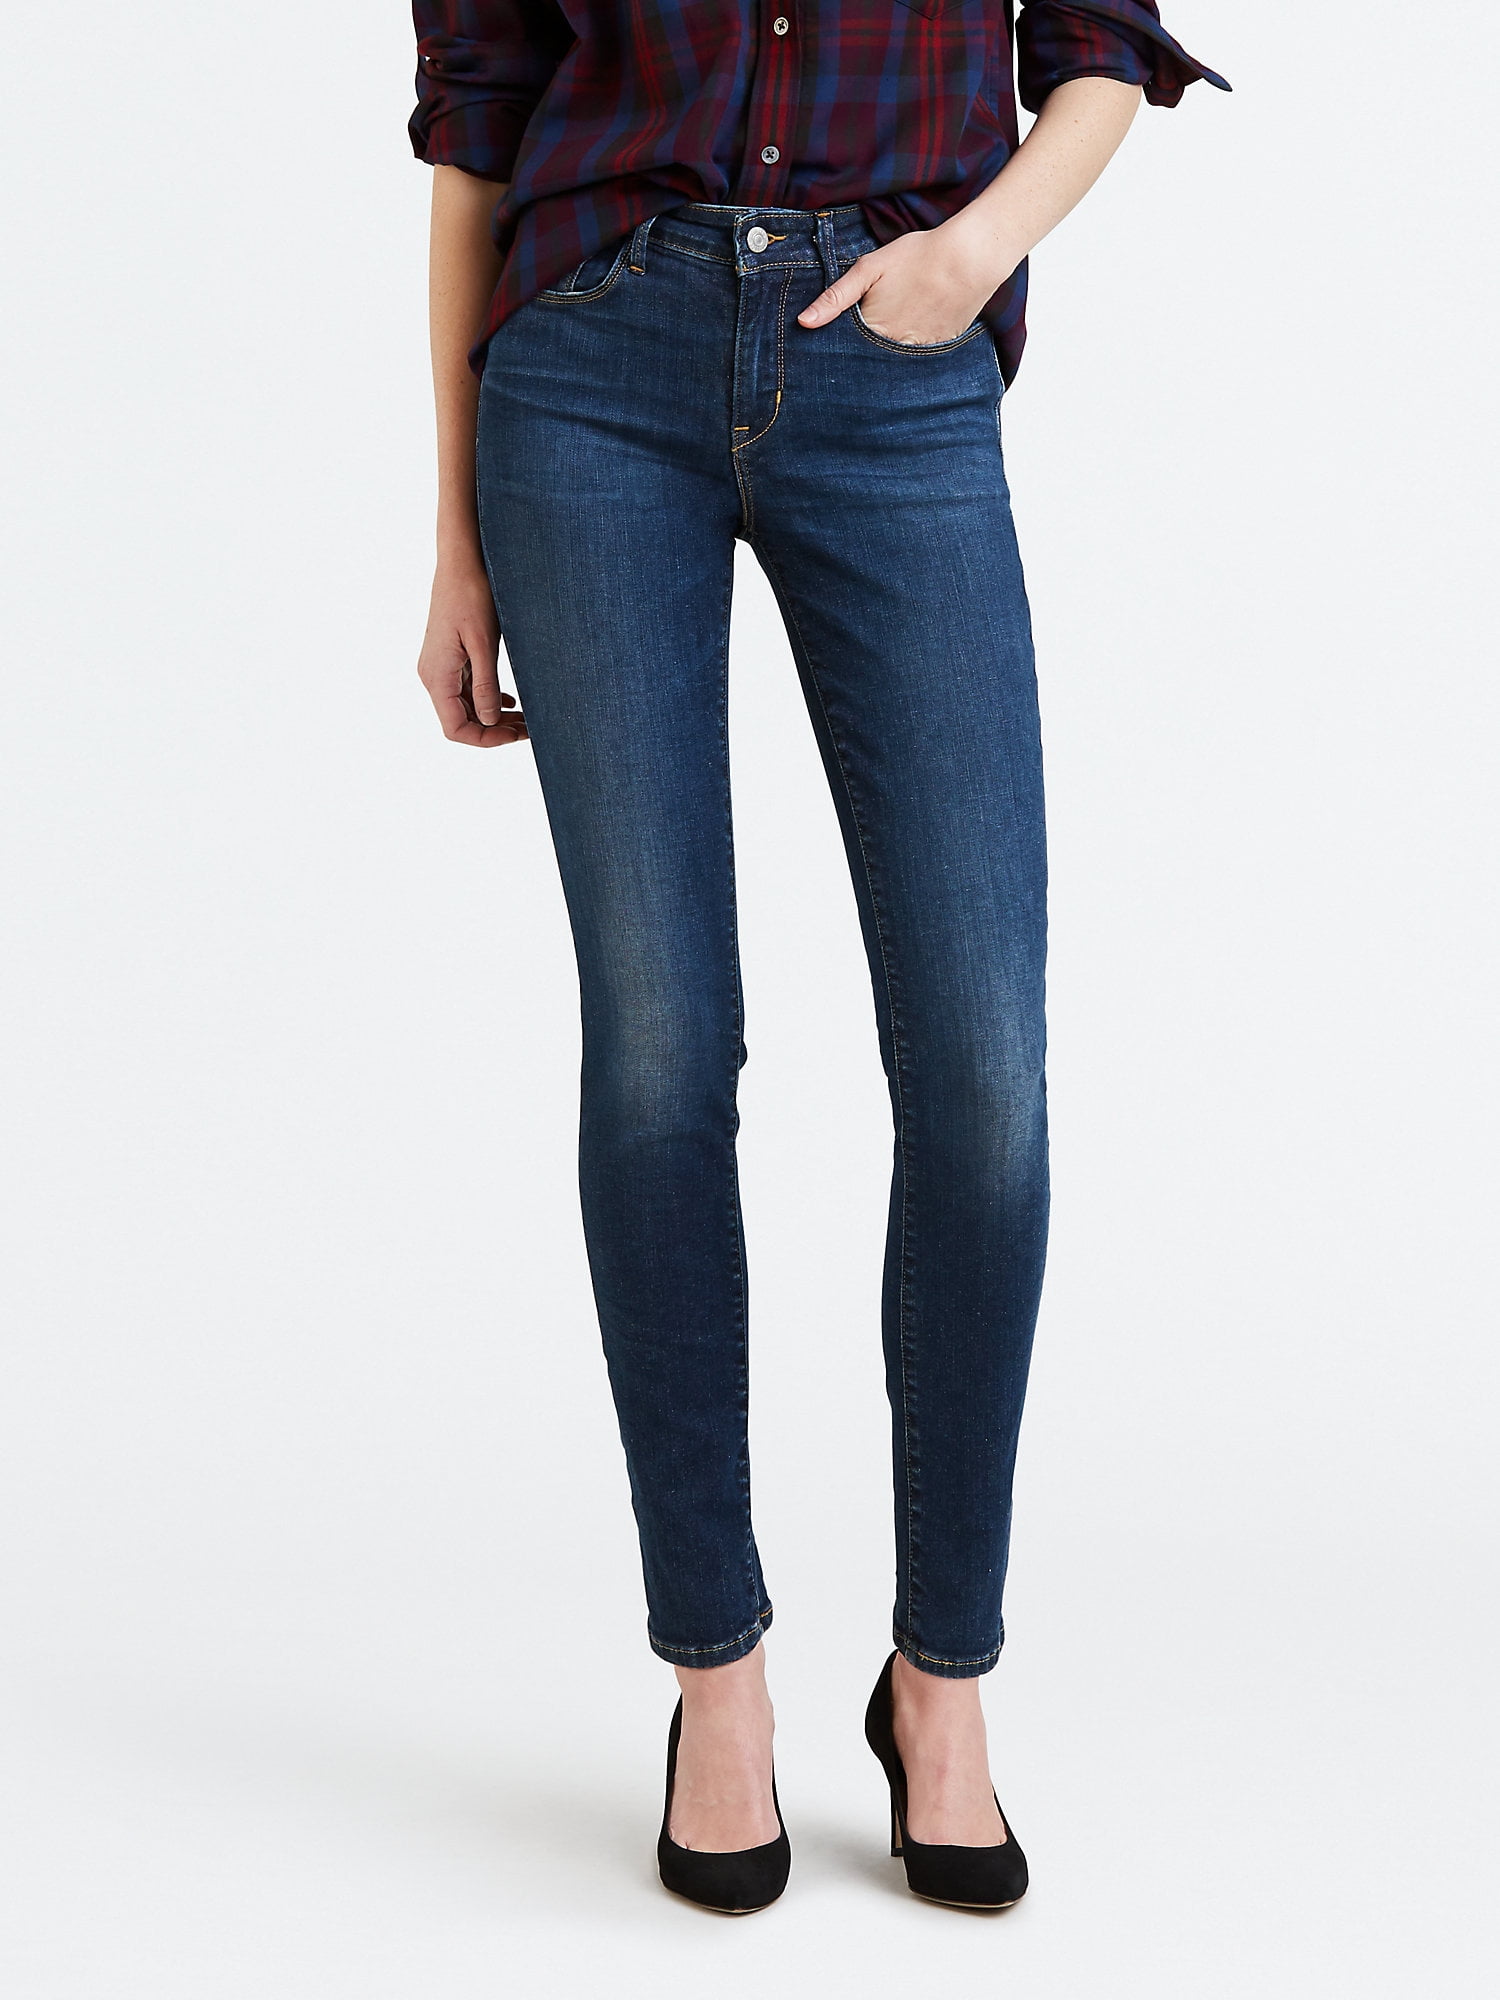 Levi's - Levi's Women's Classic Modern Mid Rise Skinny Jeans - Walmart